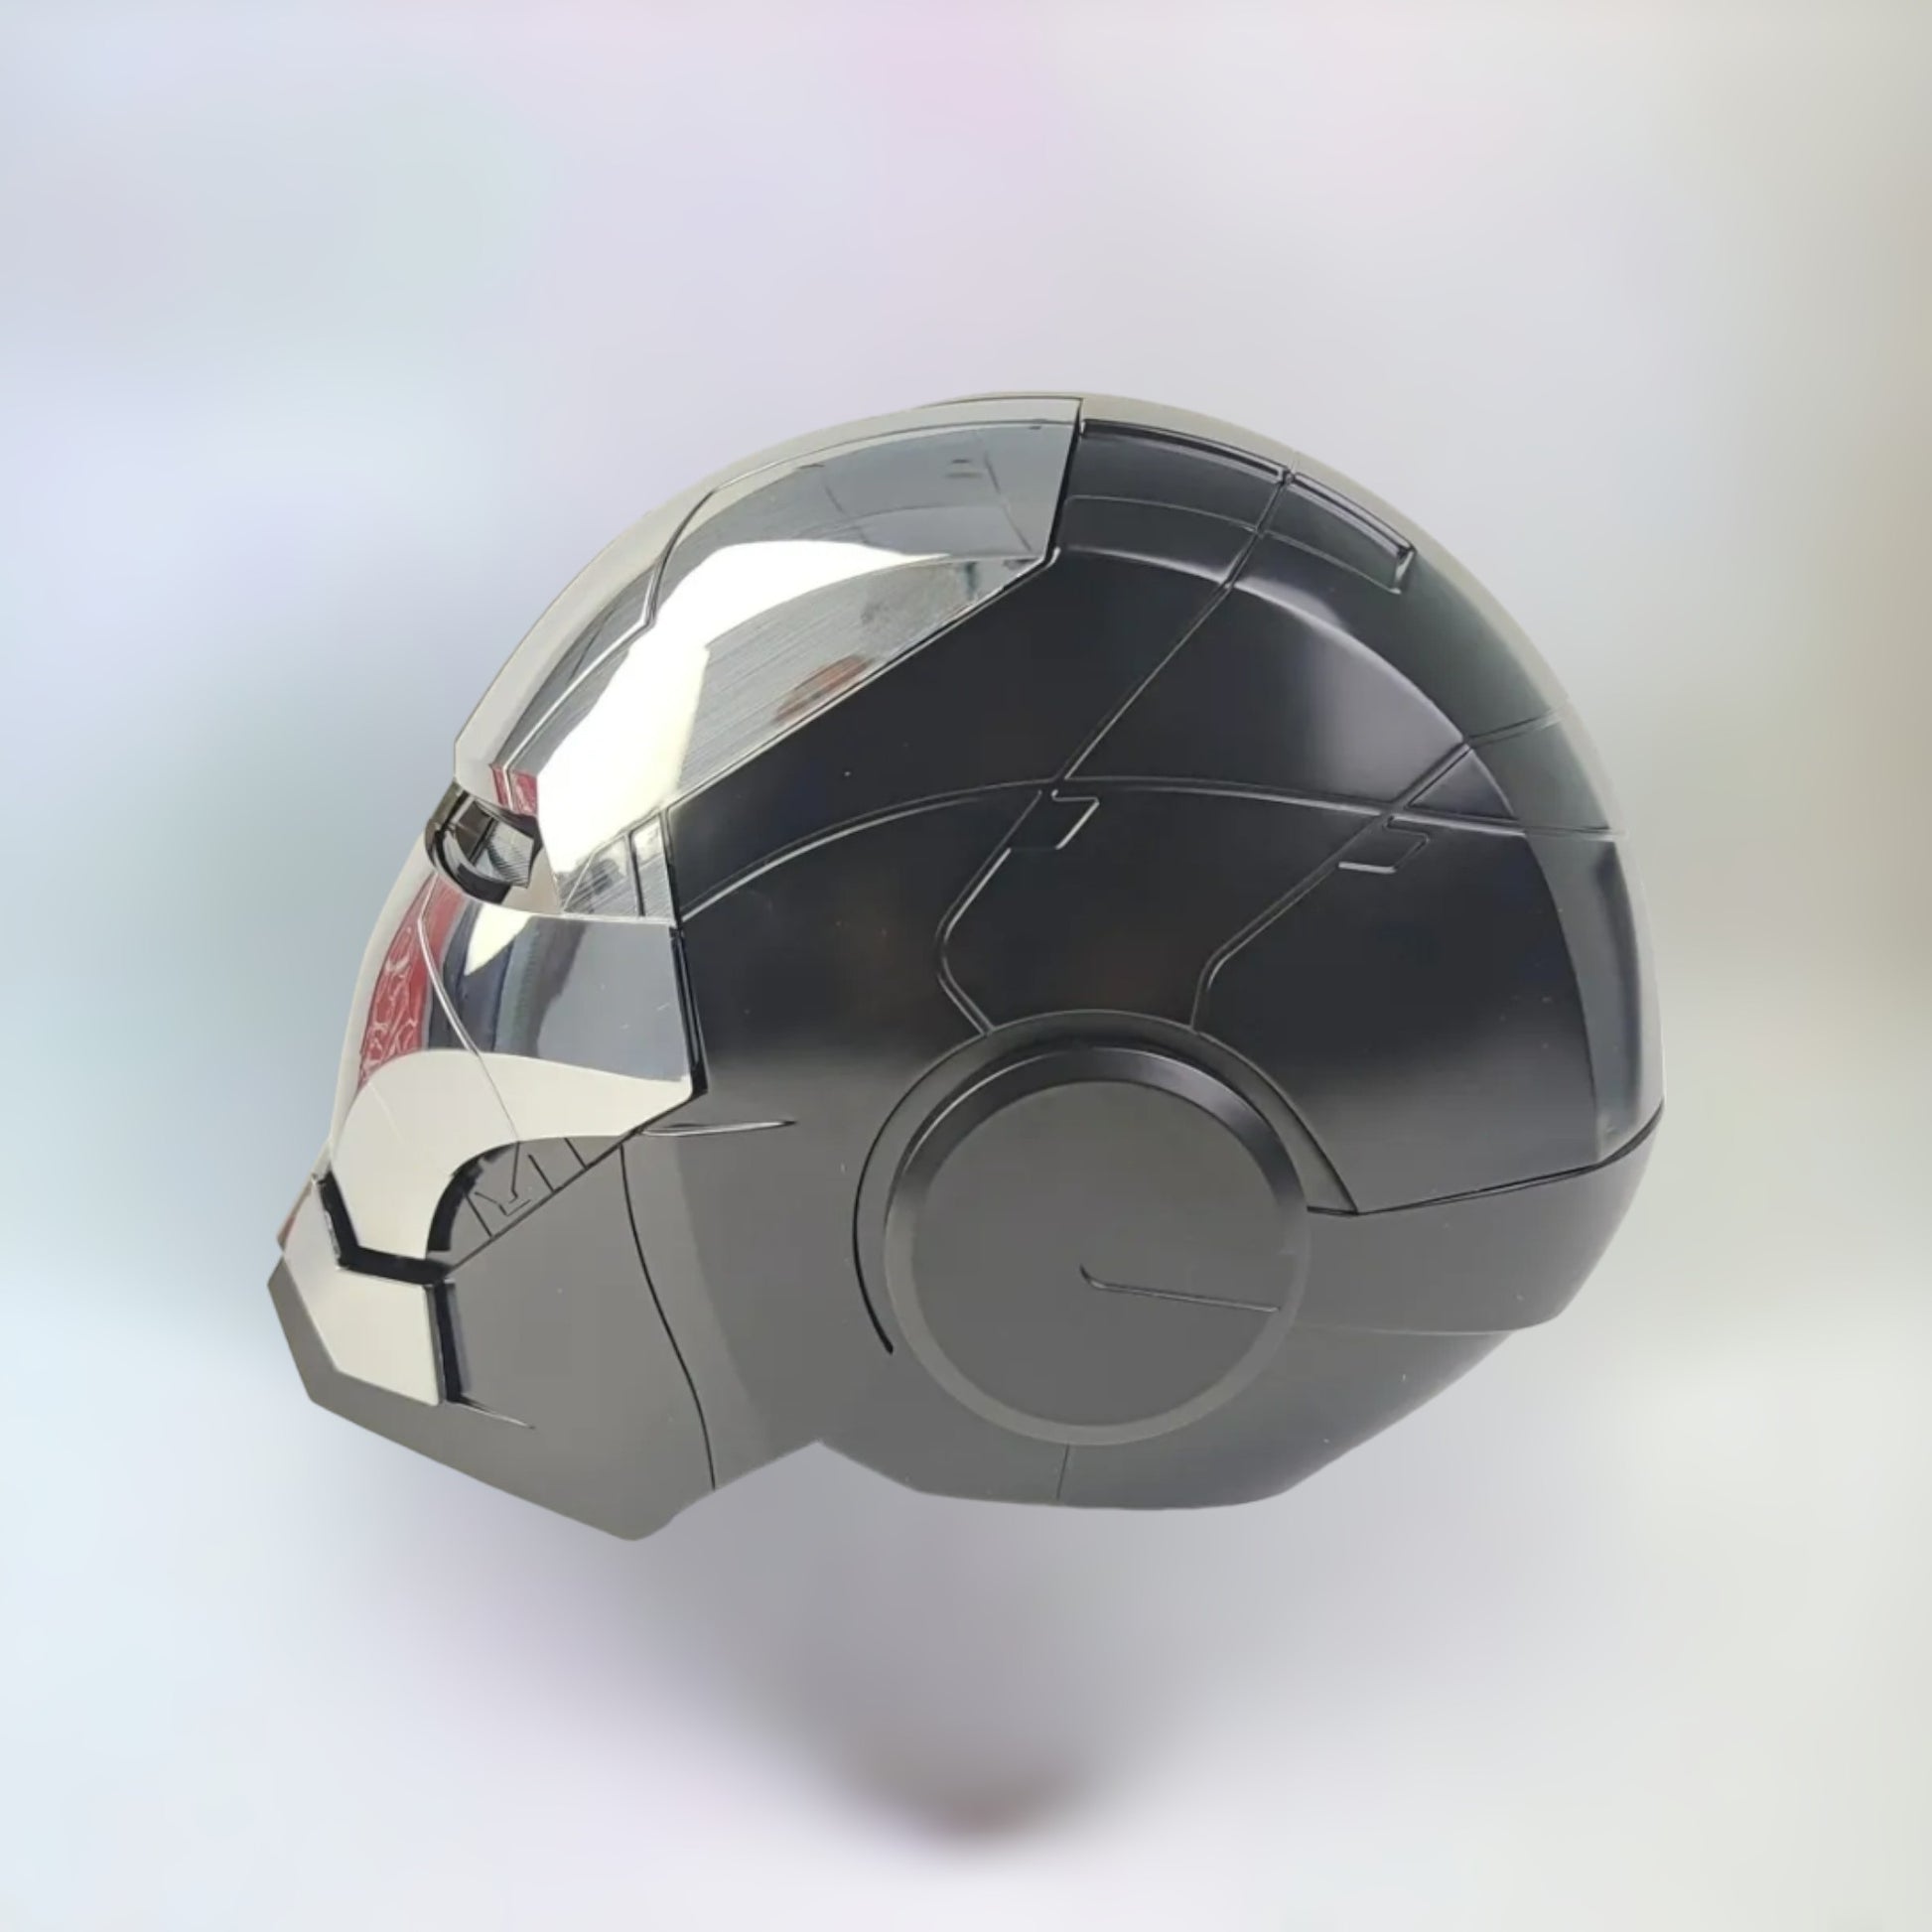 Iron Man Helmet MK5 Black War Machine Edition With Jarvis Voice Activation side view on plain white background.